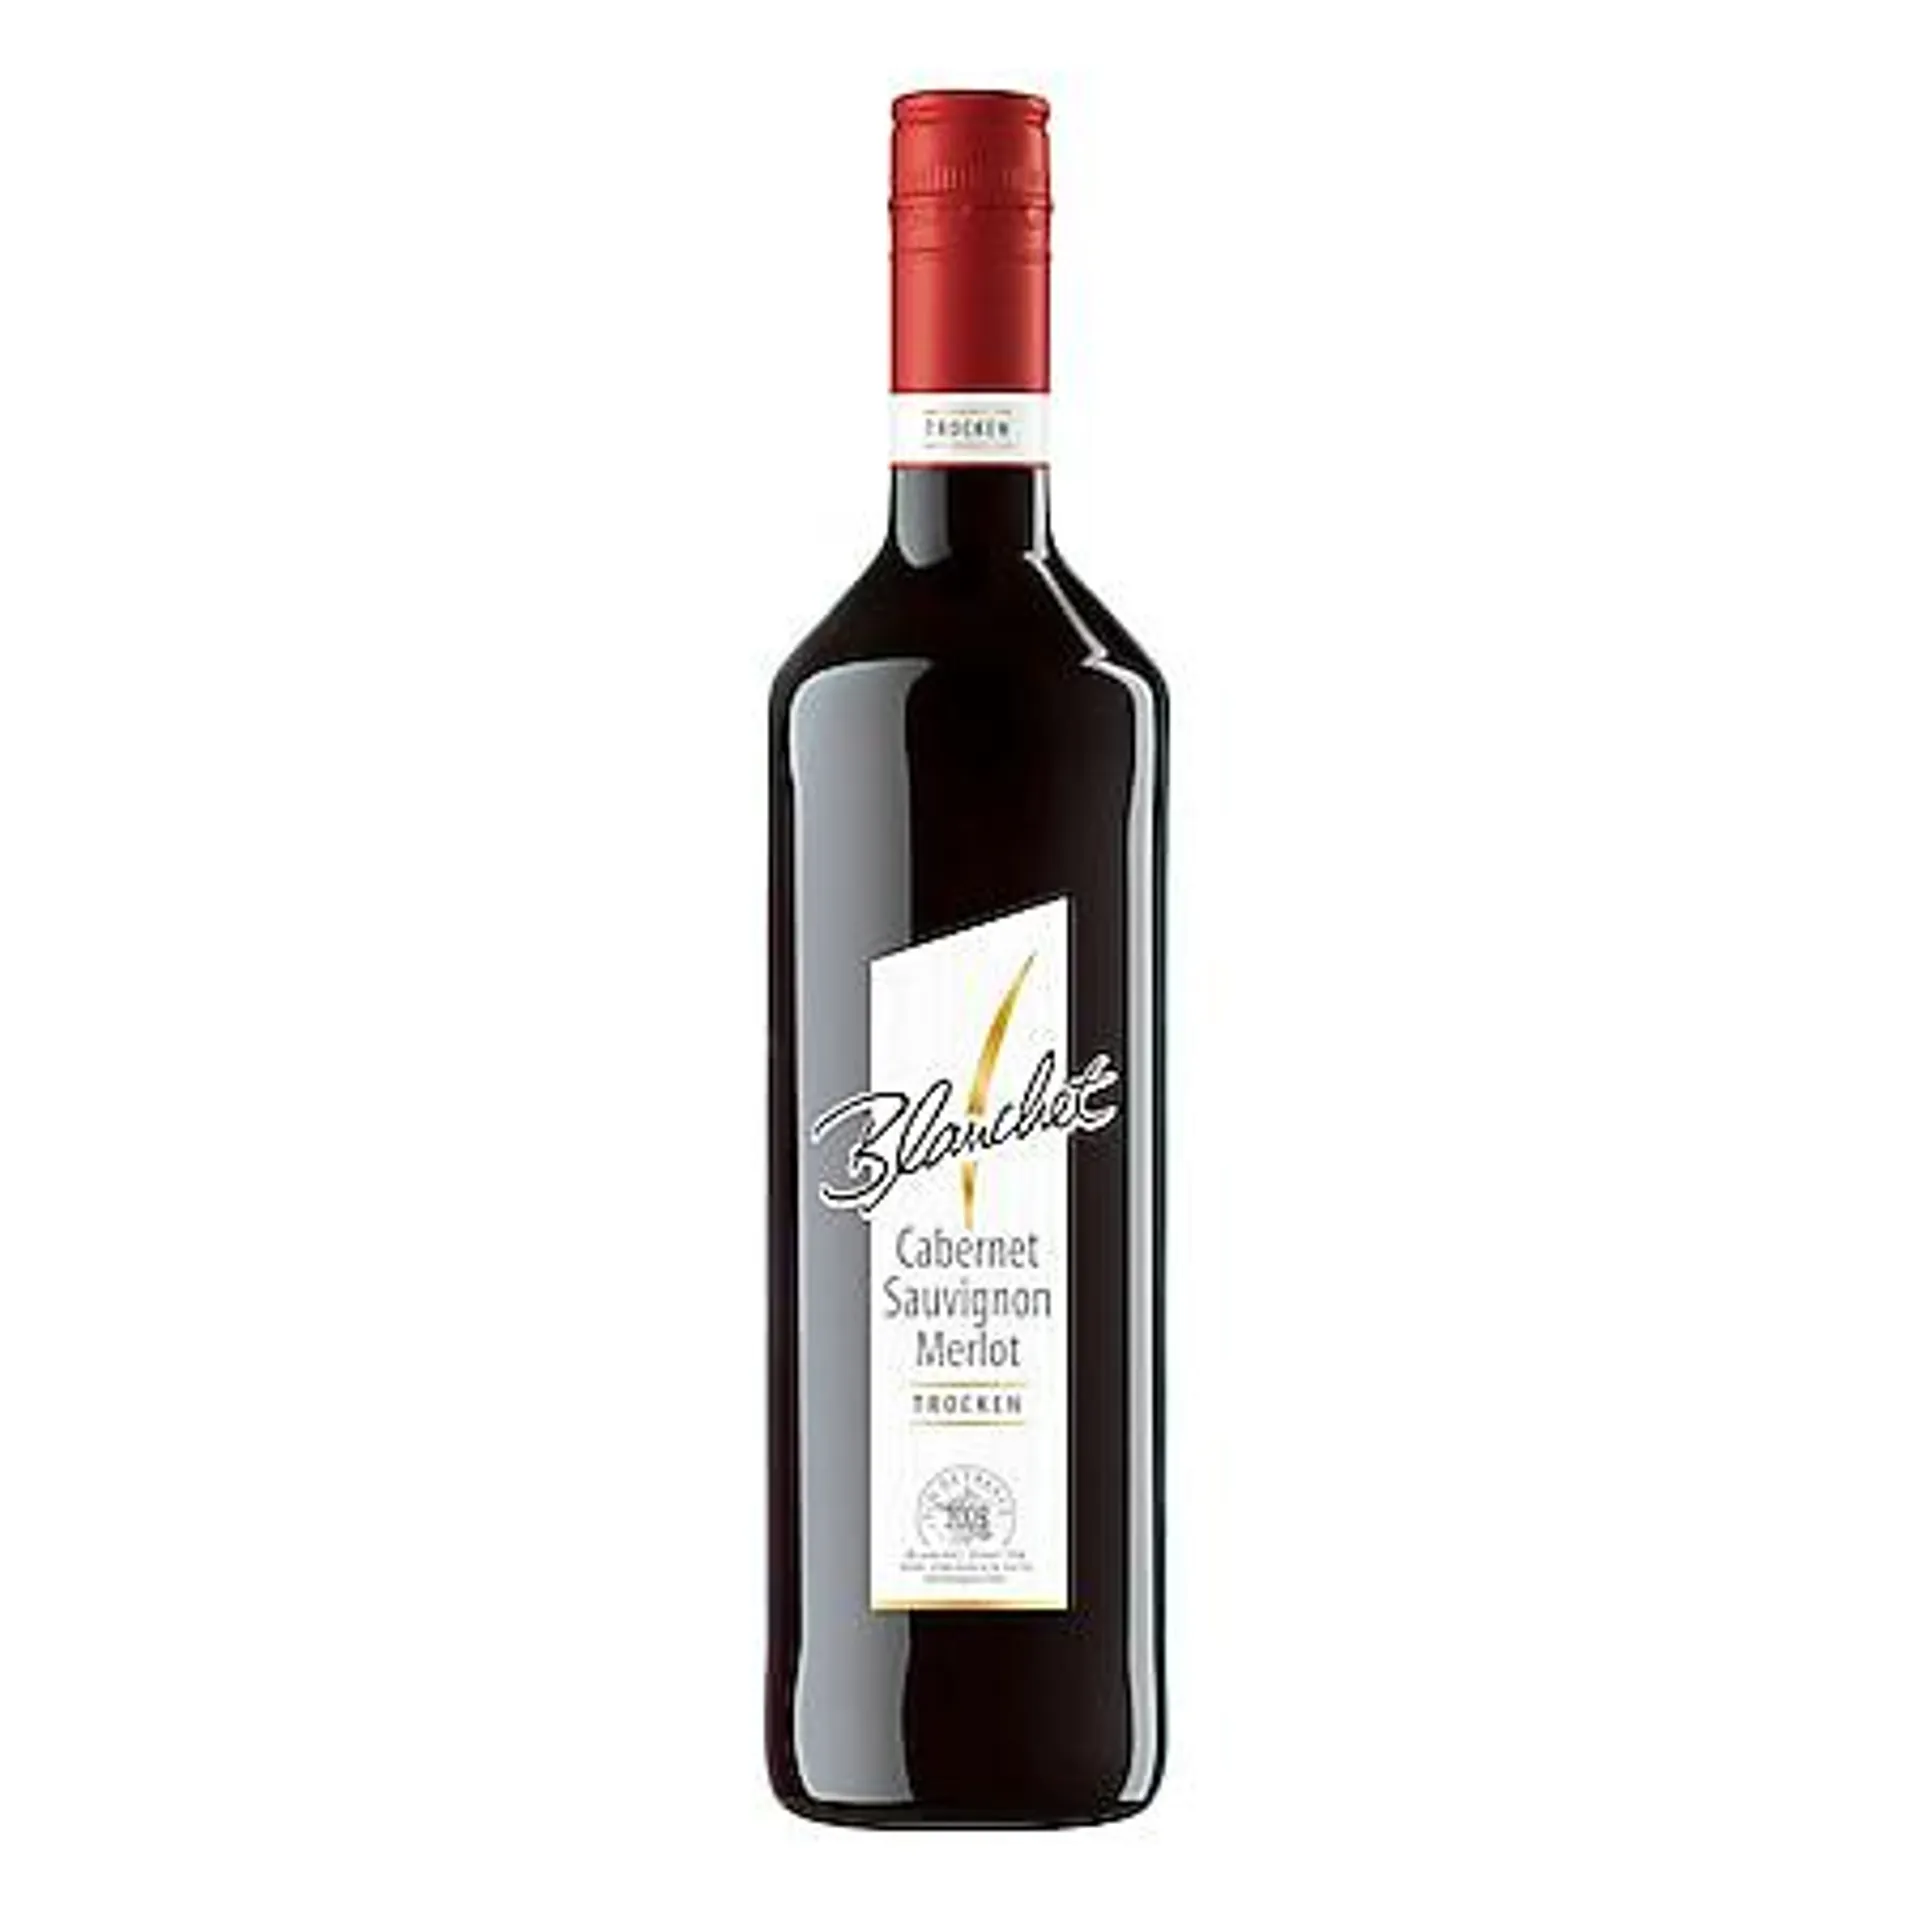 Blanchet Cabernet Sauvignon Merlot trocken Vin de France 12,5 % vol 0,75 Liter